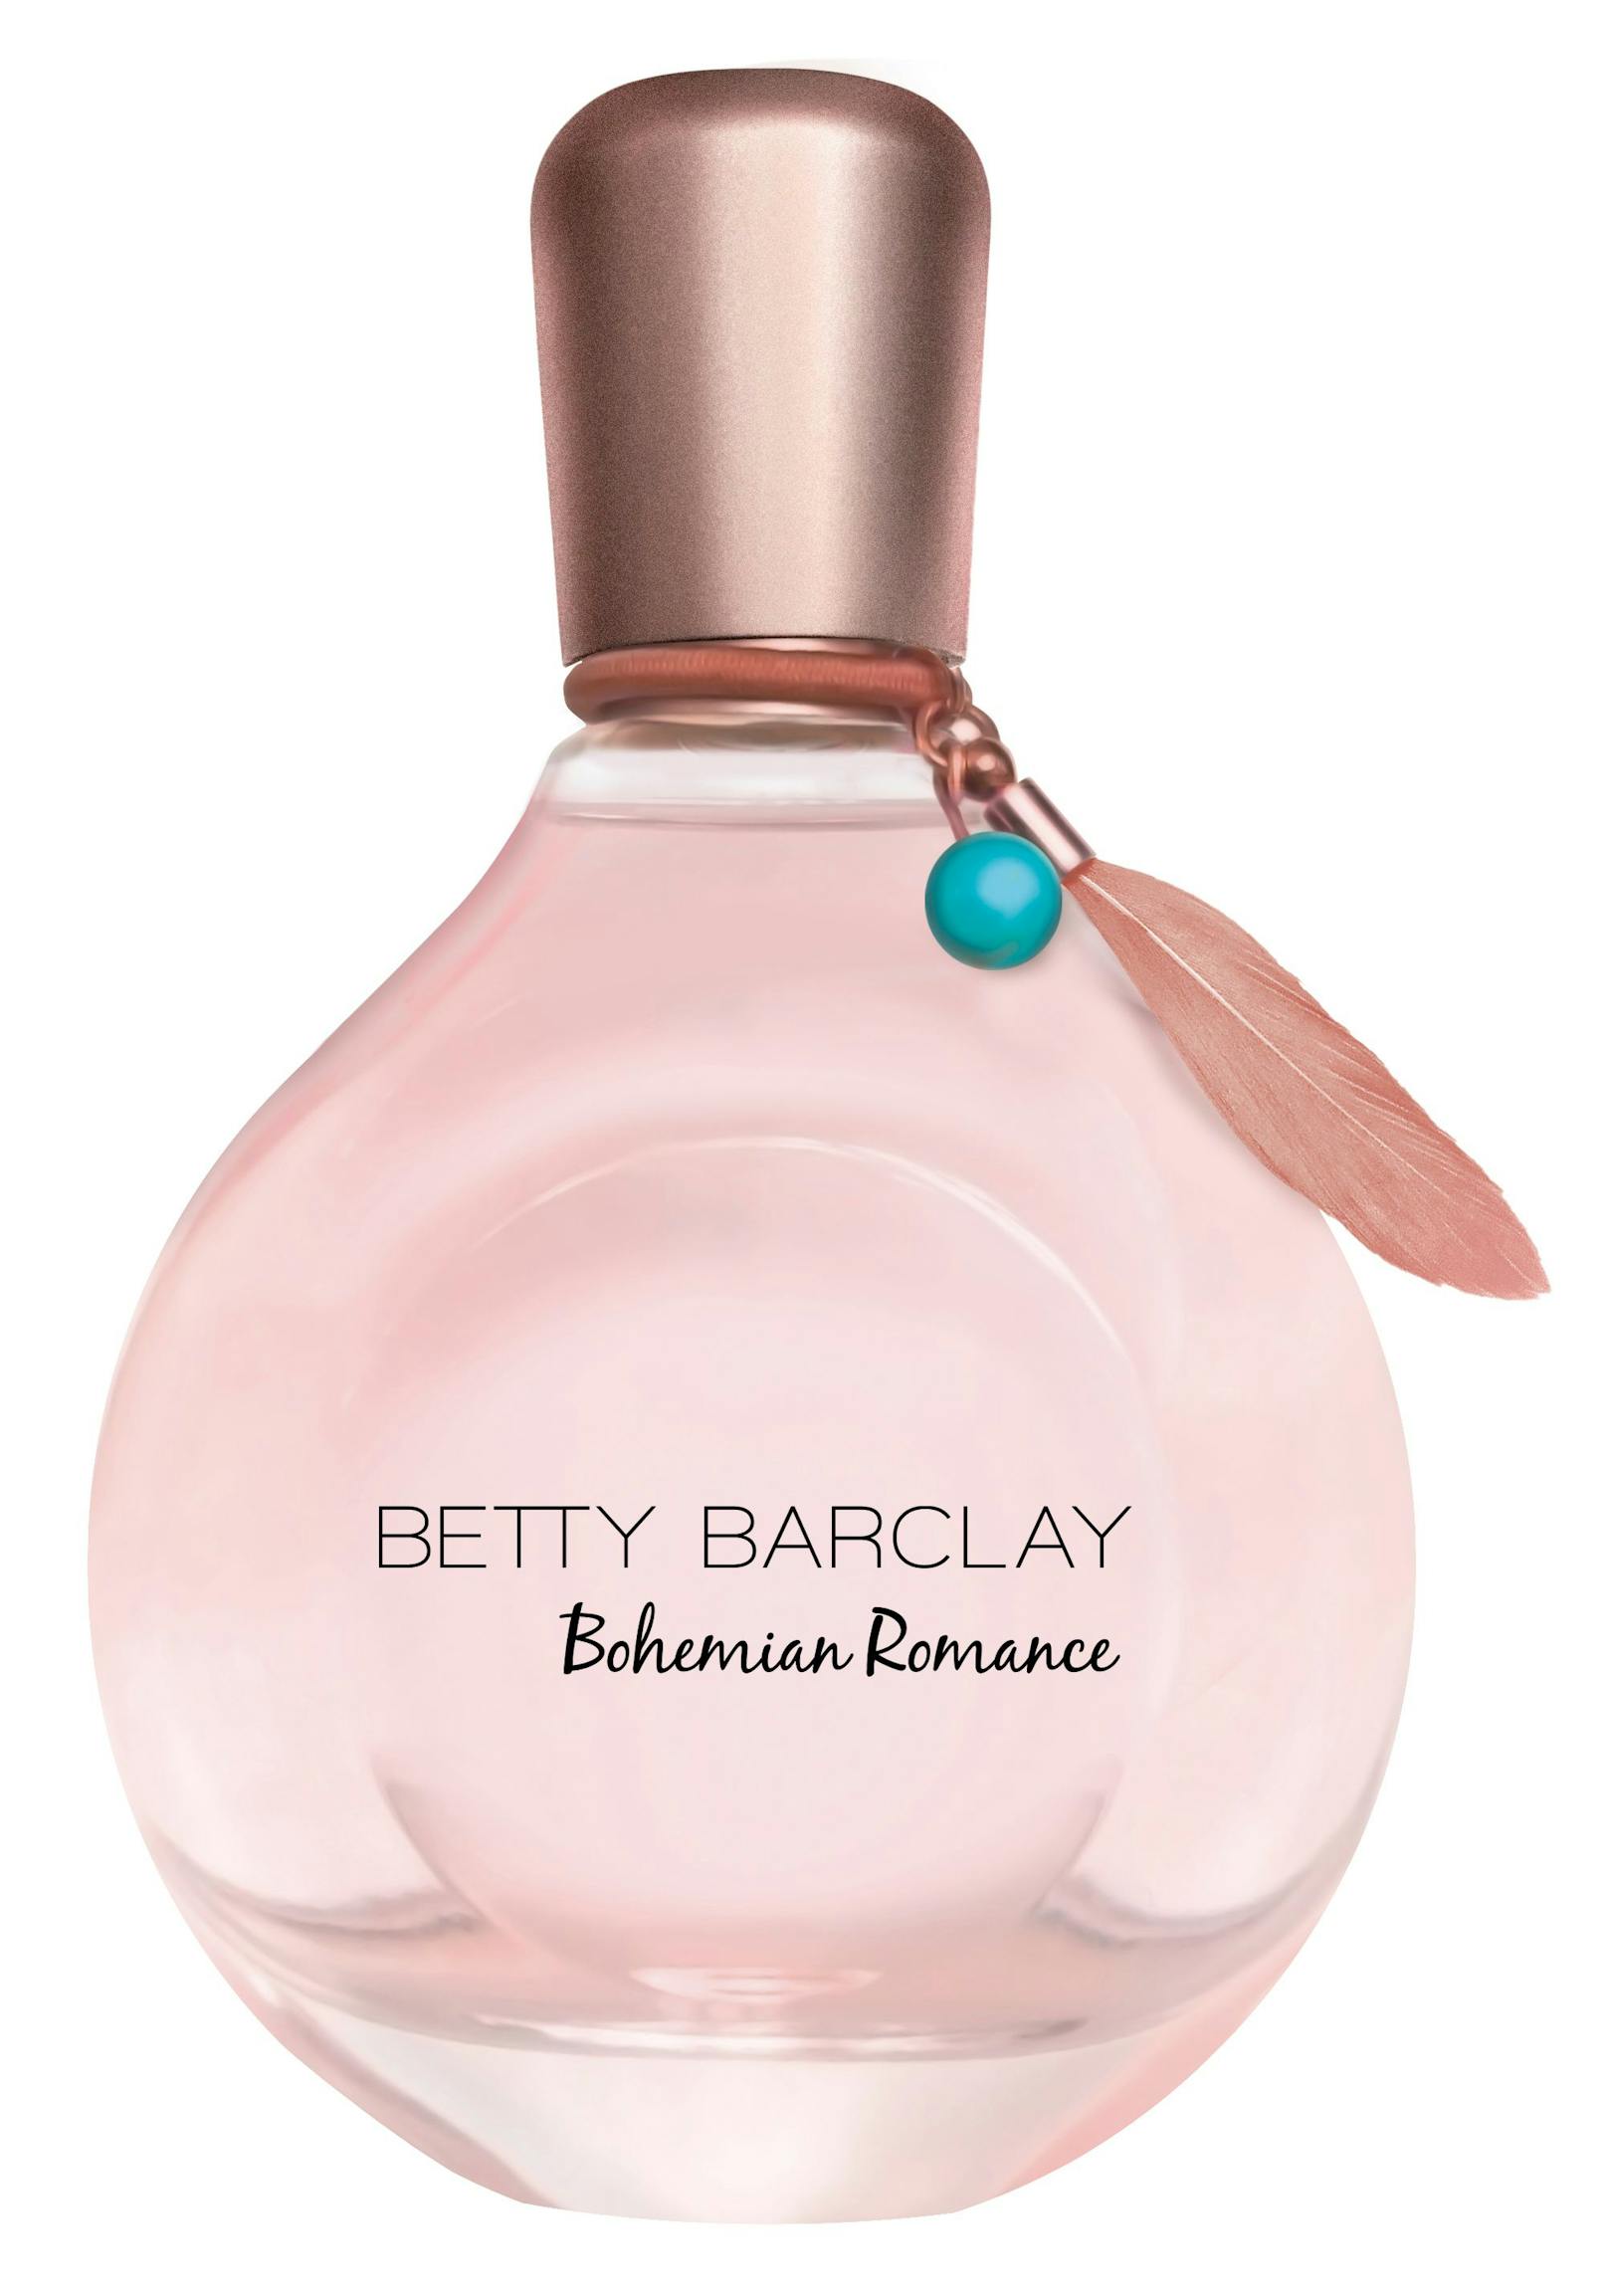 Betty Barclay "Bohemian Romance"